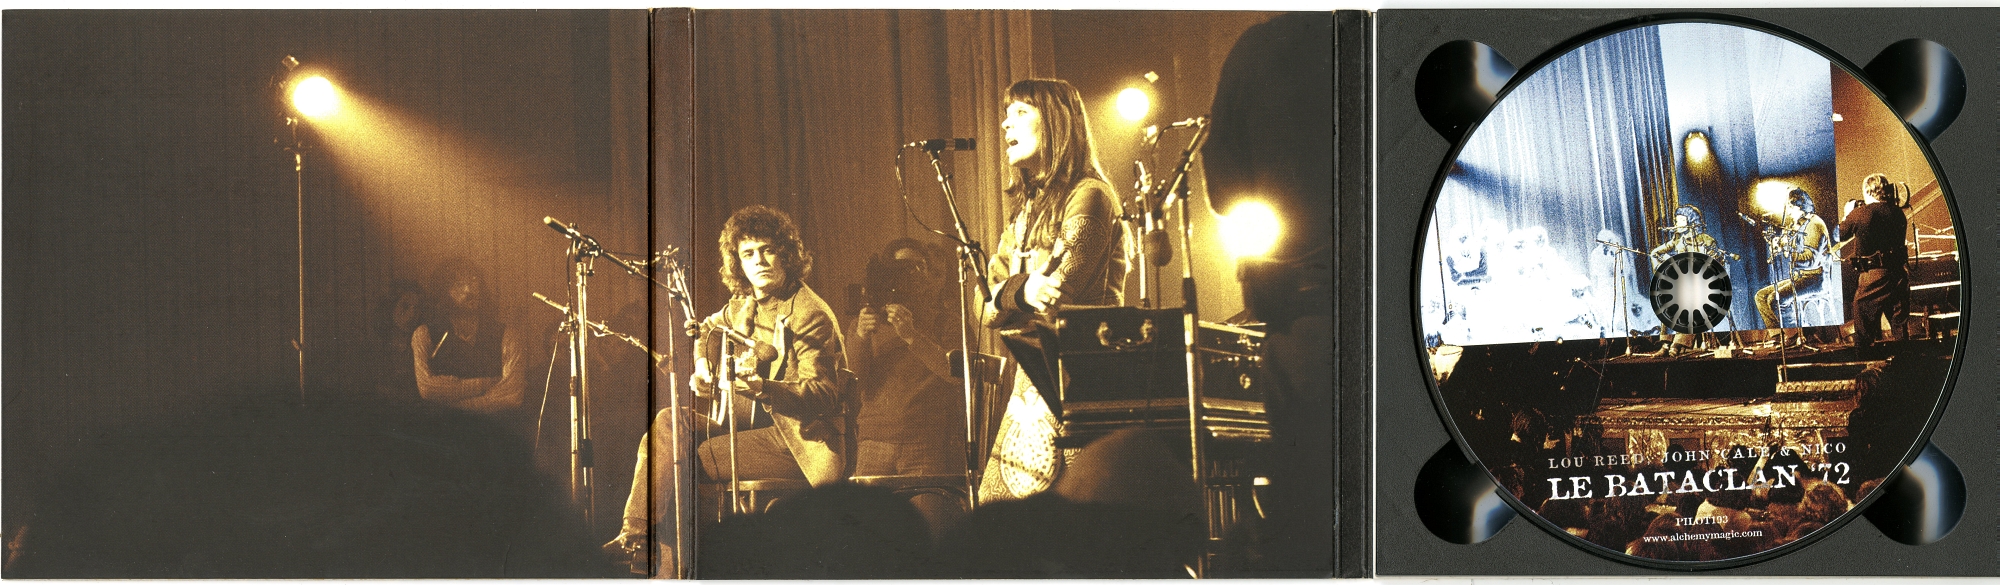 Lou Reed, John Cale & Nico Le Bataclan '72 Label